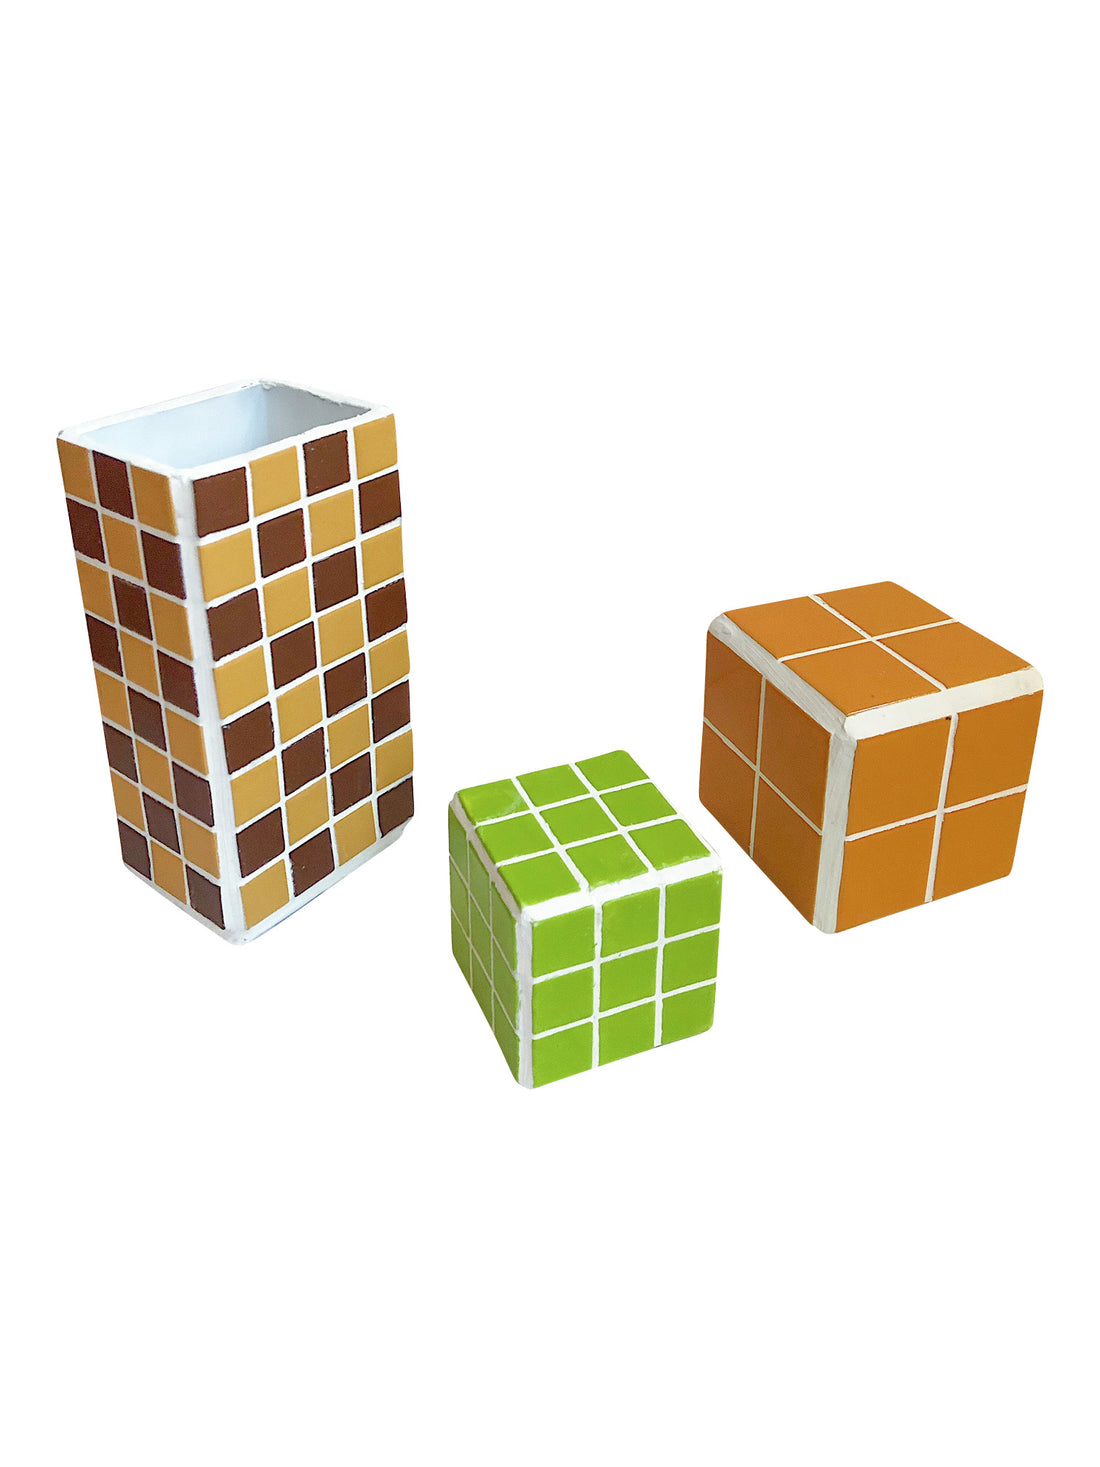 Tiled Cubes